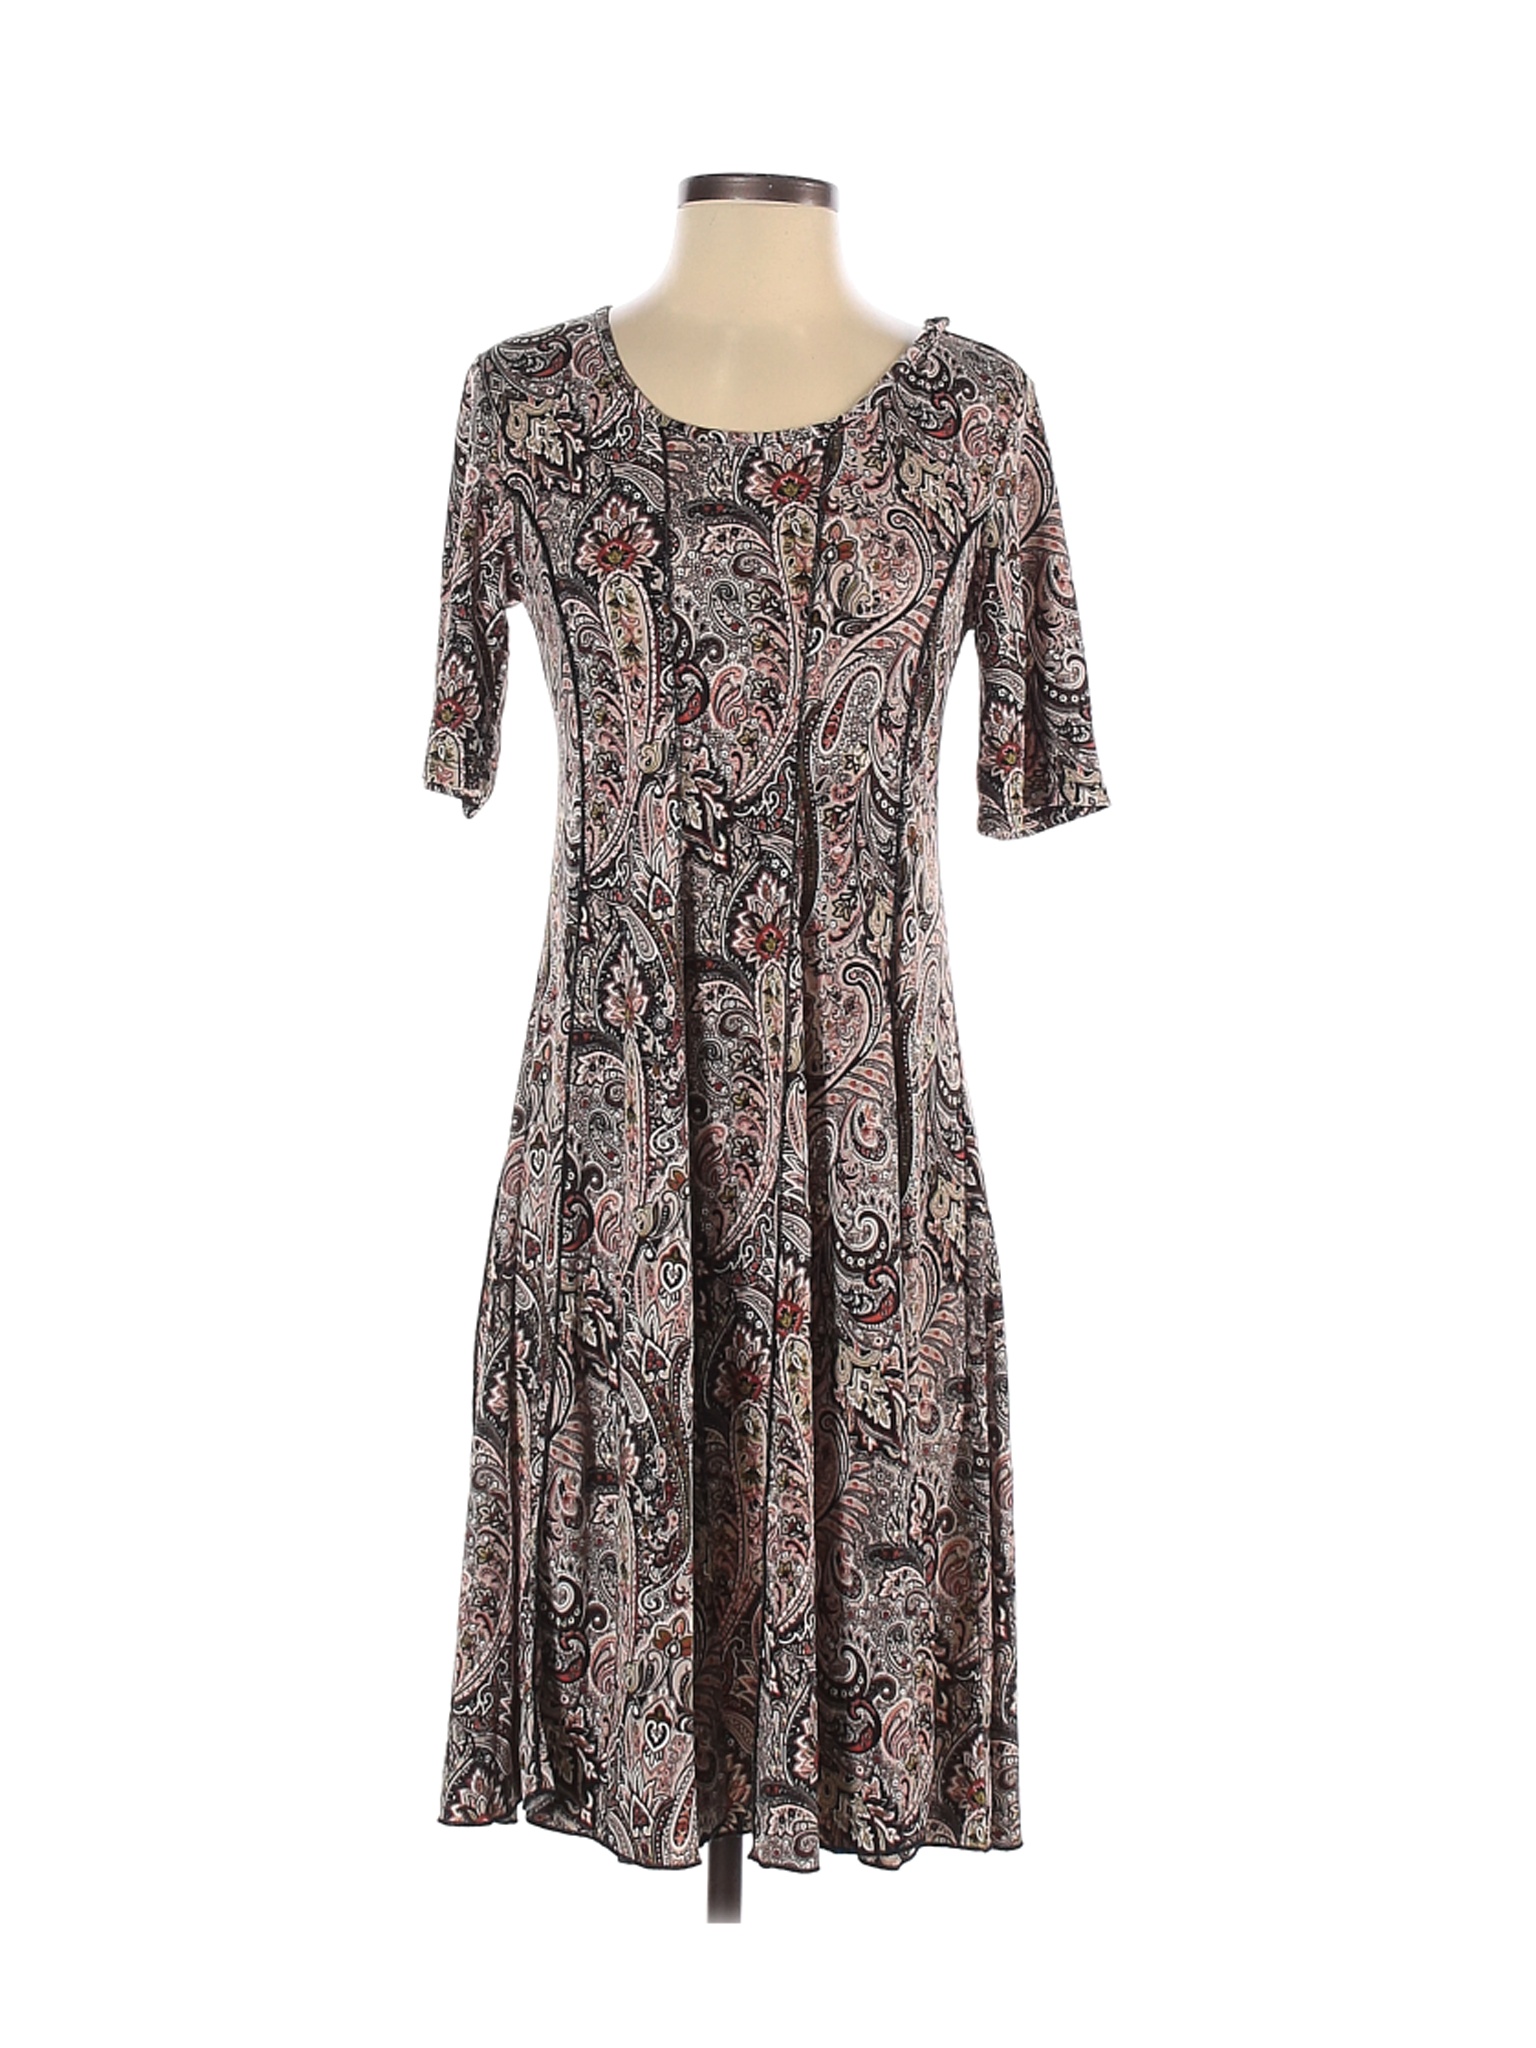 Sami & JO Women Brown Casual Dress S | eBay